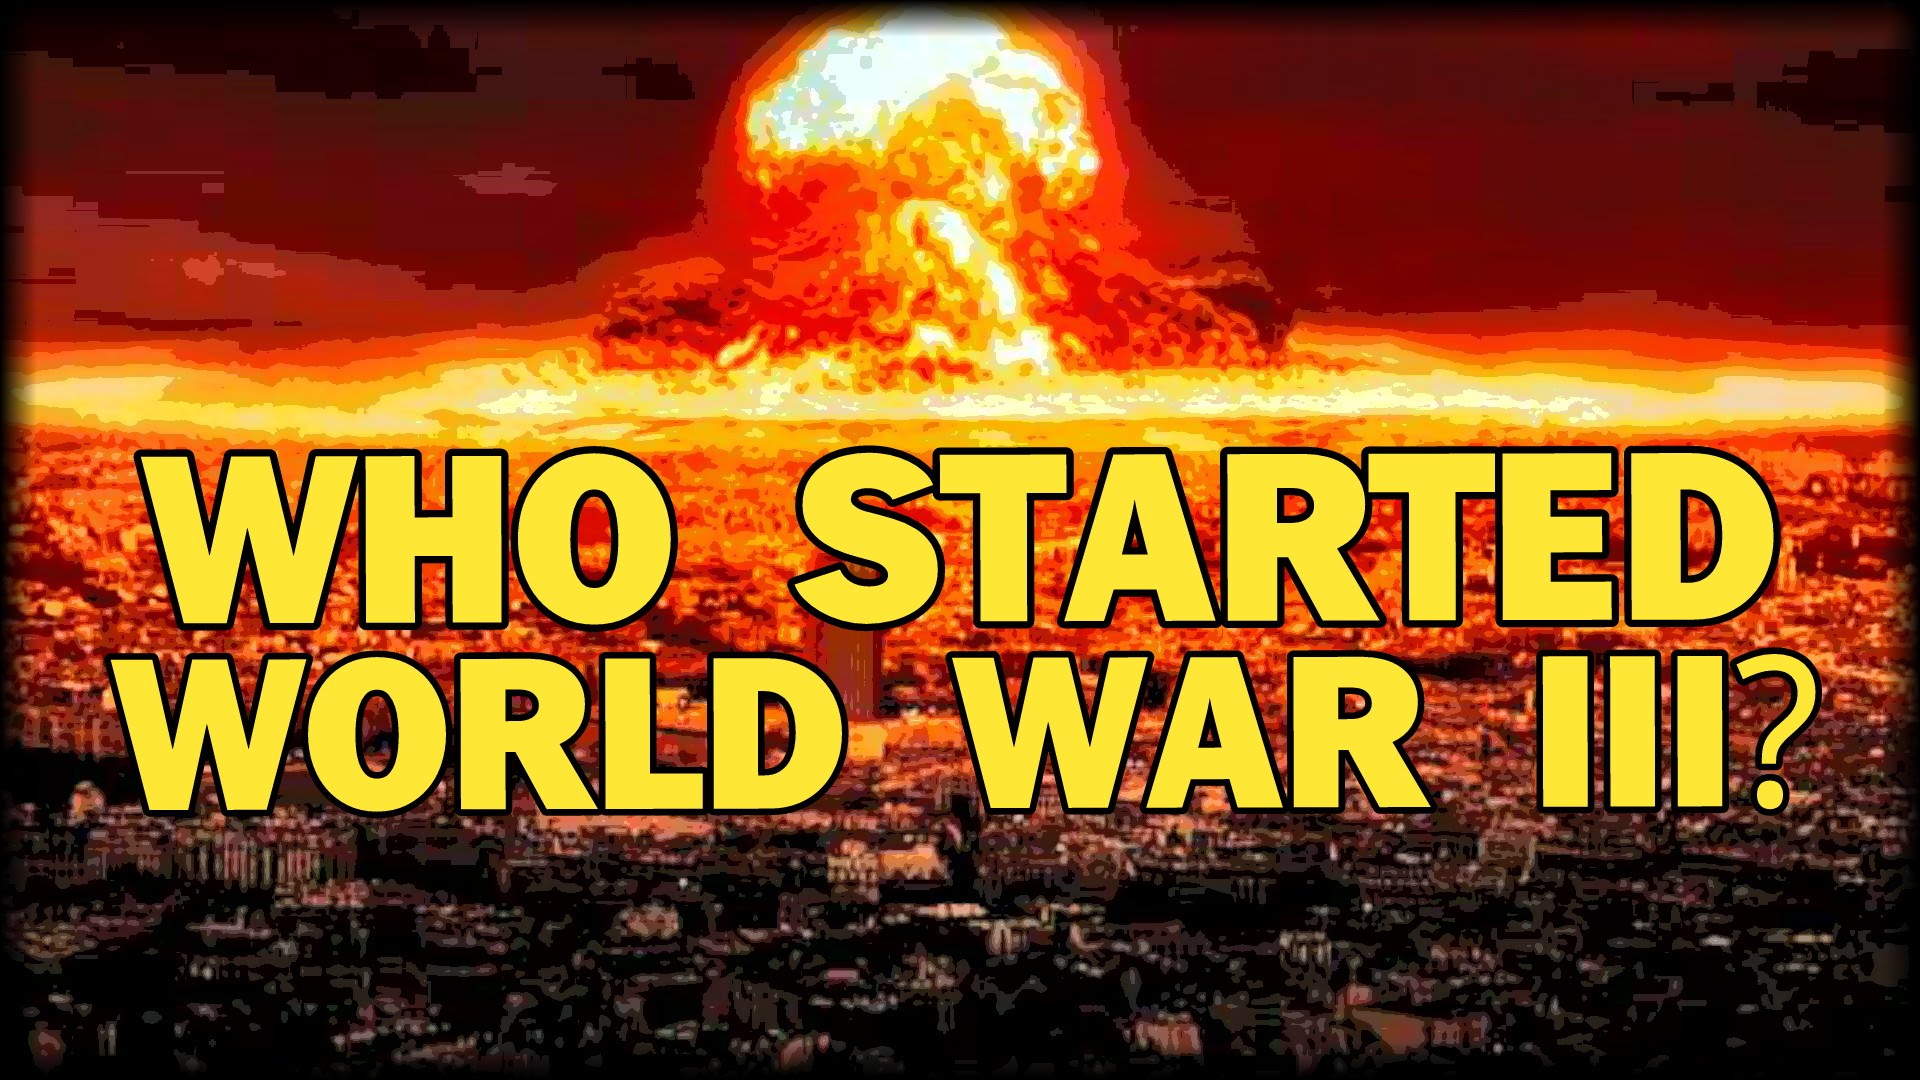 WHO STARTED WORLD WAR III?